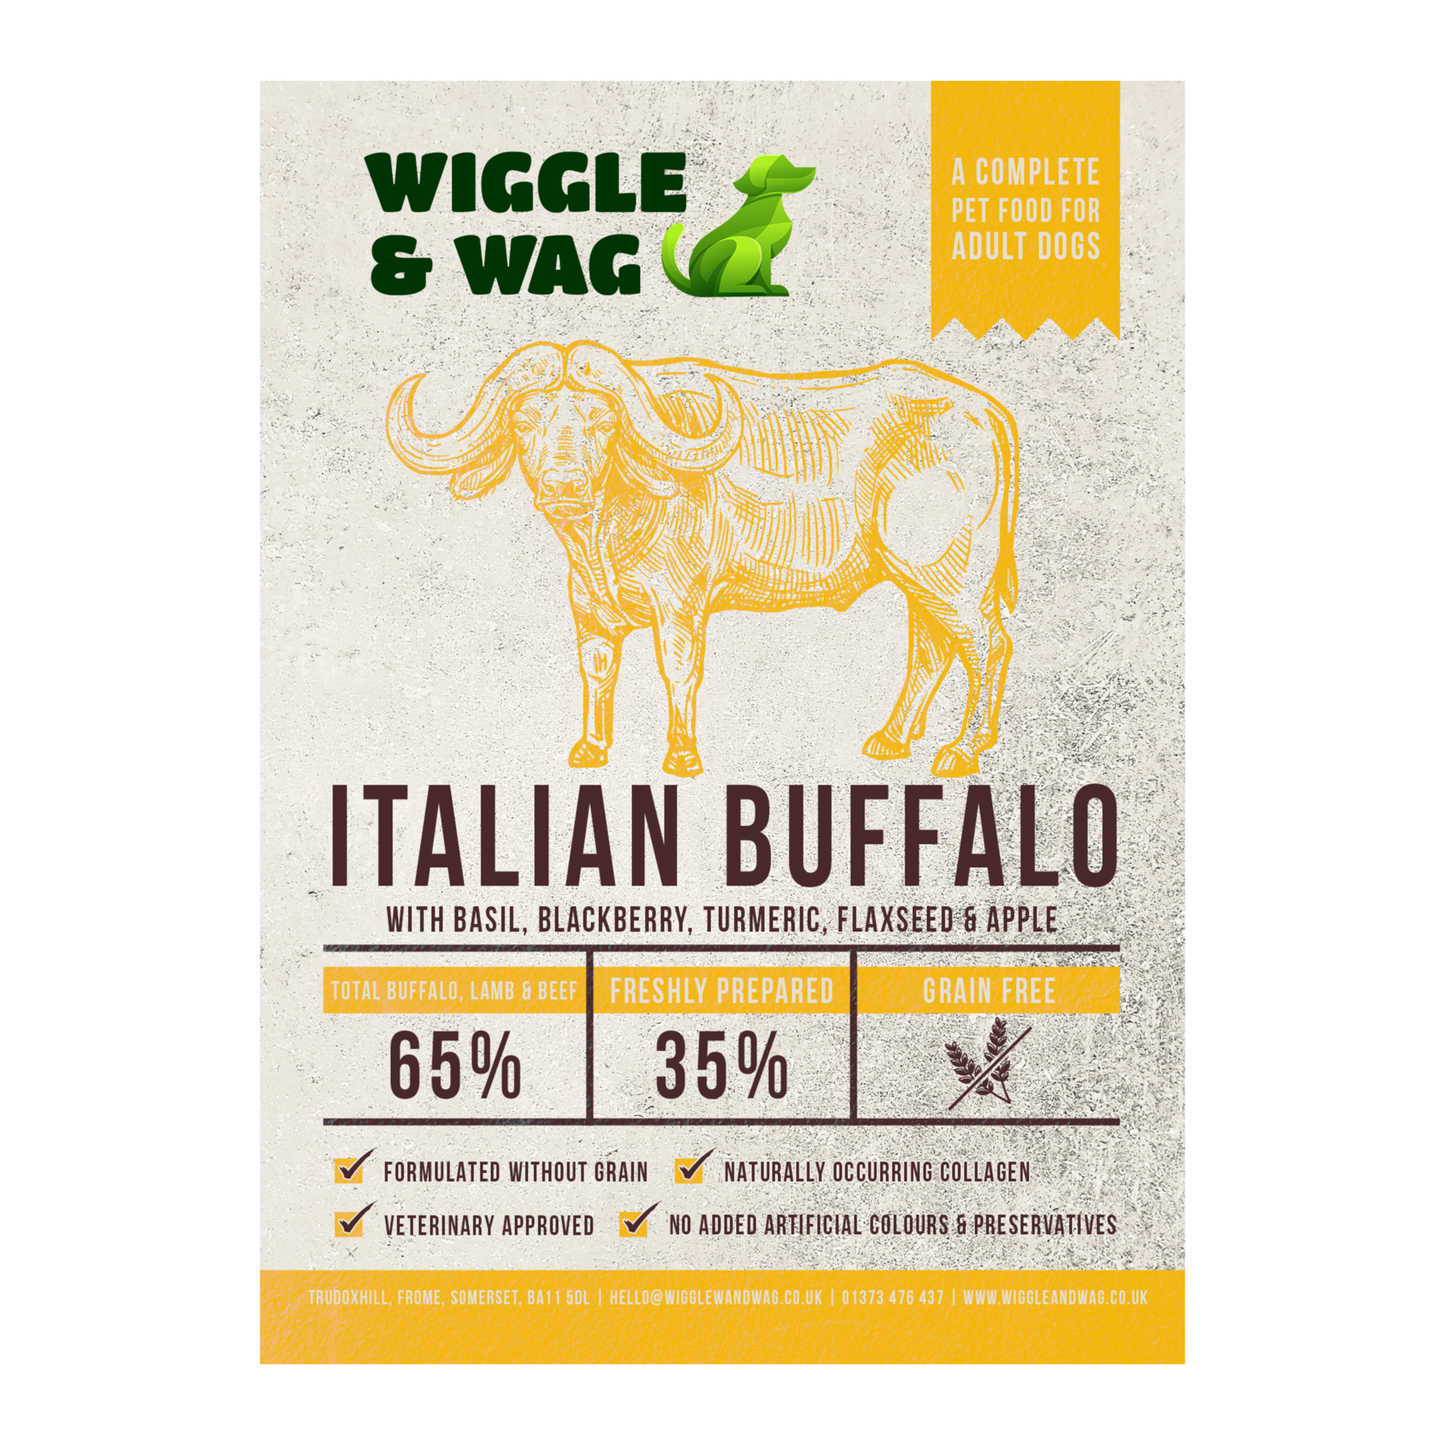 Grain Free Dog Food - Italian Buffalo, Complete adult dog food